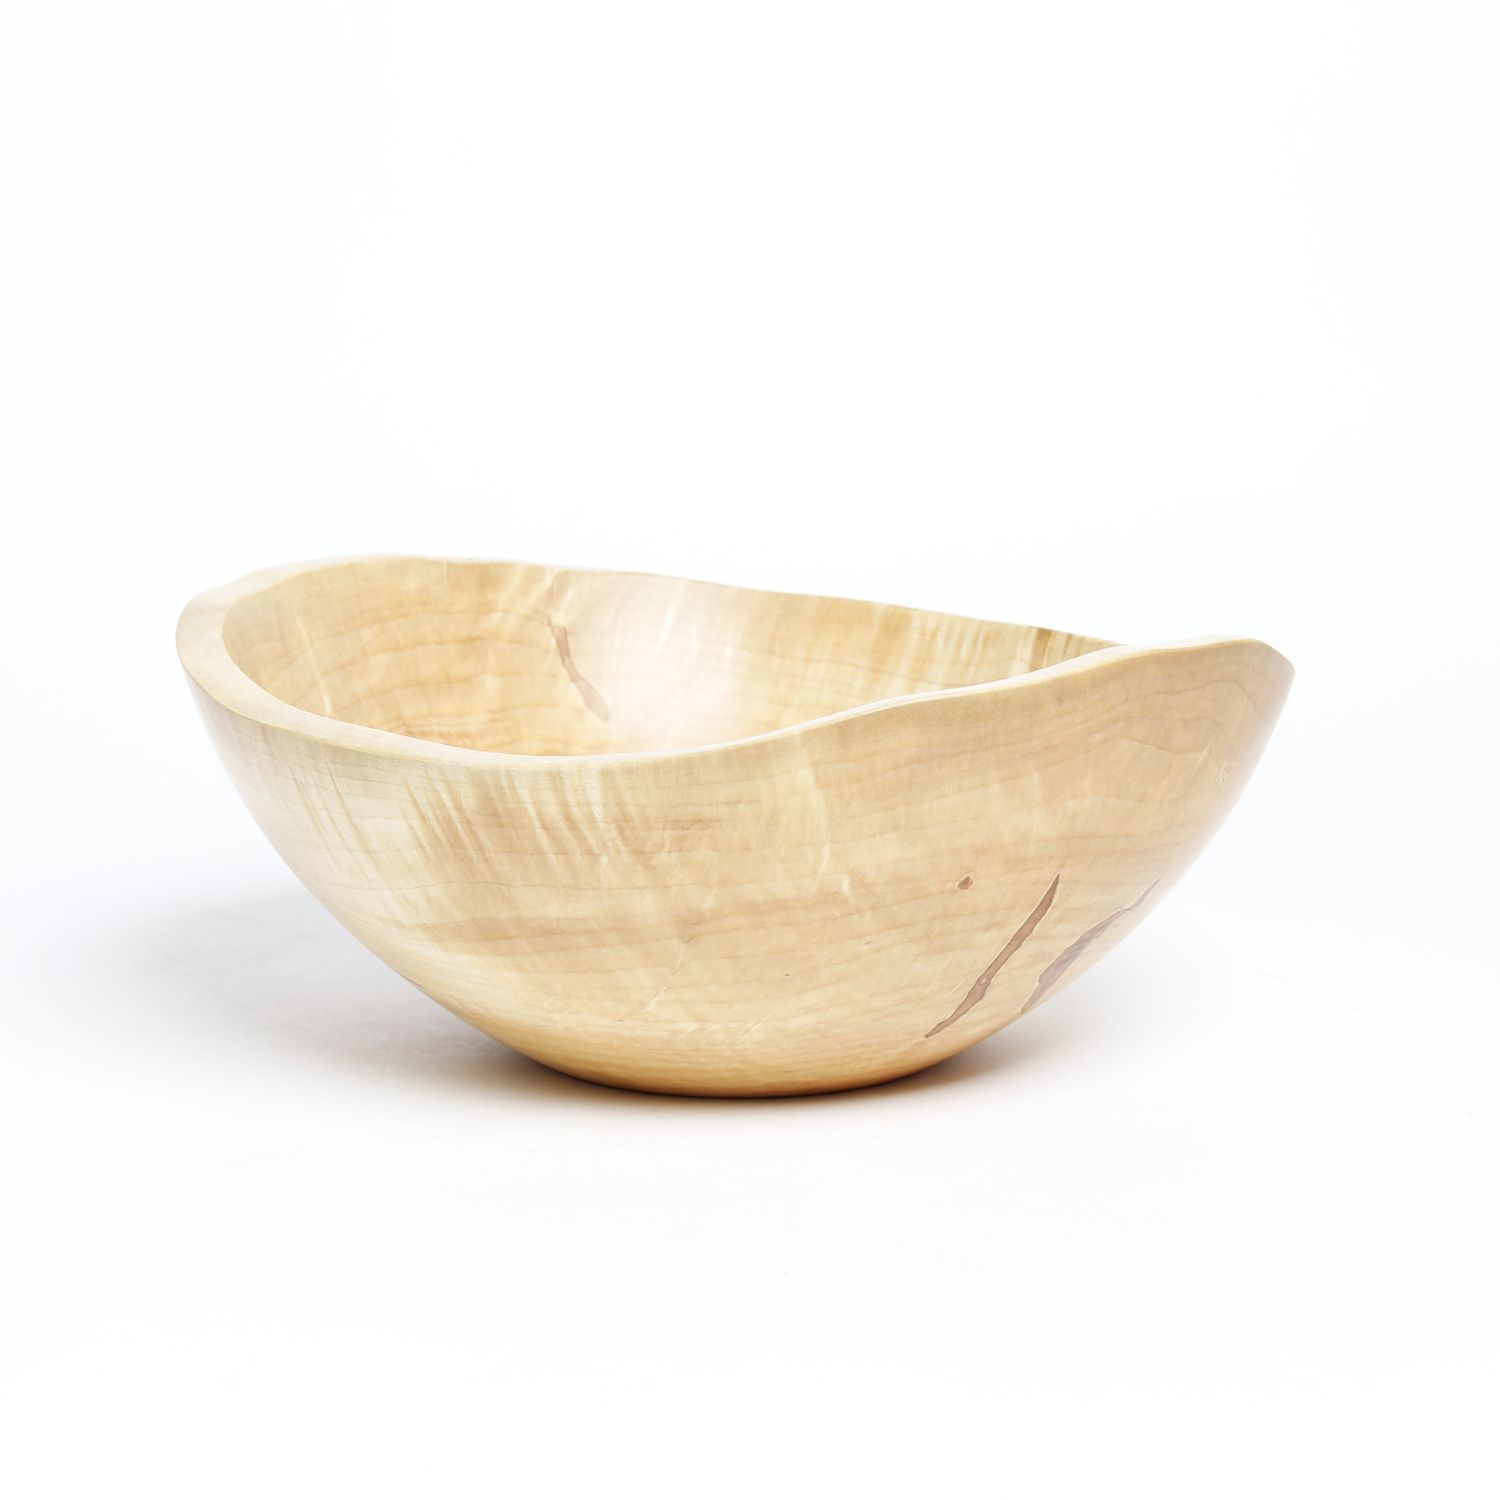 Michael Sbrocca: Bowl Maple Product Image 3 of 3